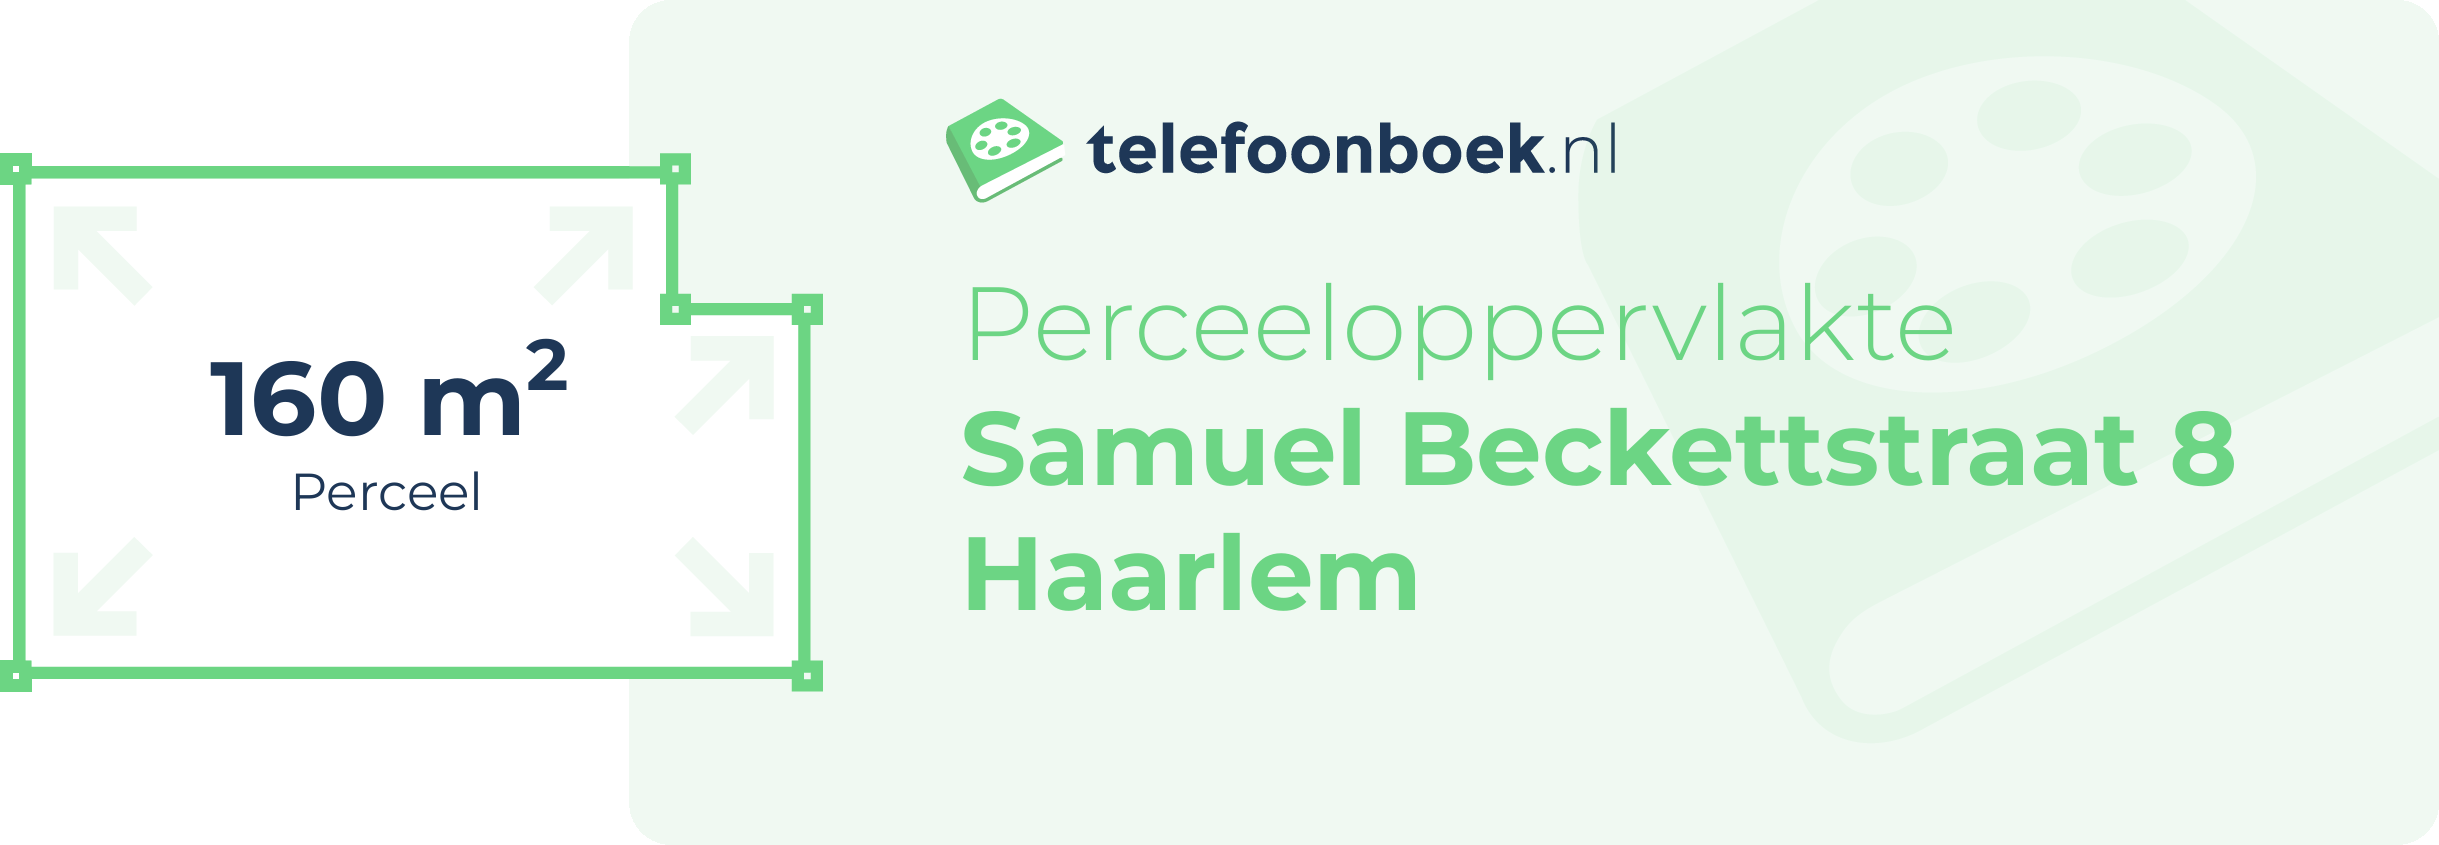 Perceeloppervlakte Samuel Beckettstraat 8 Haarlem